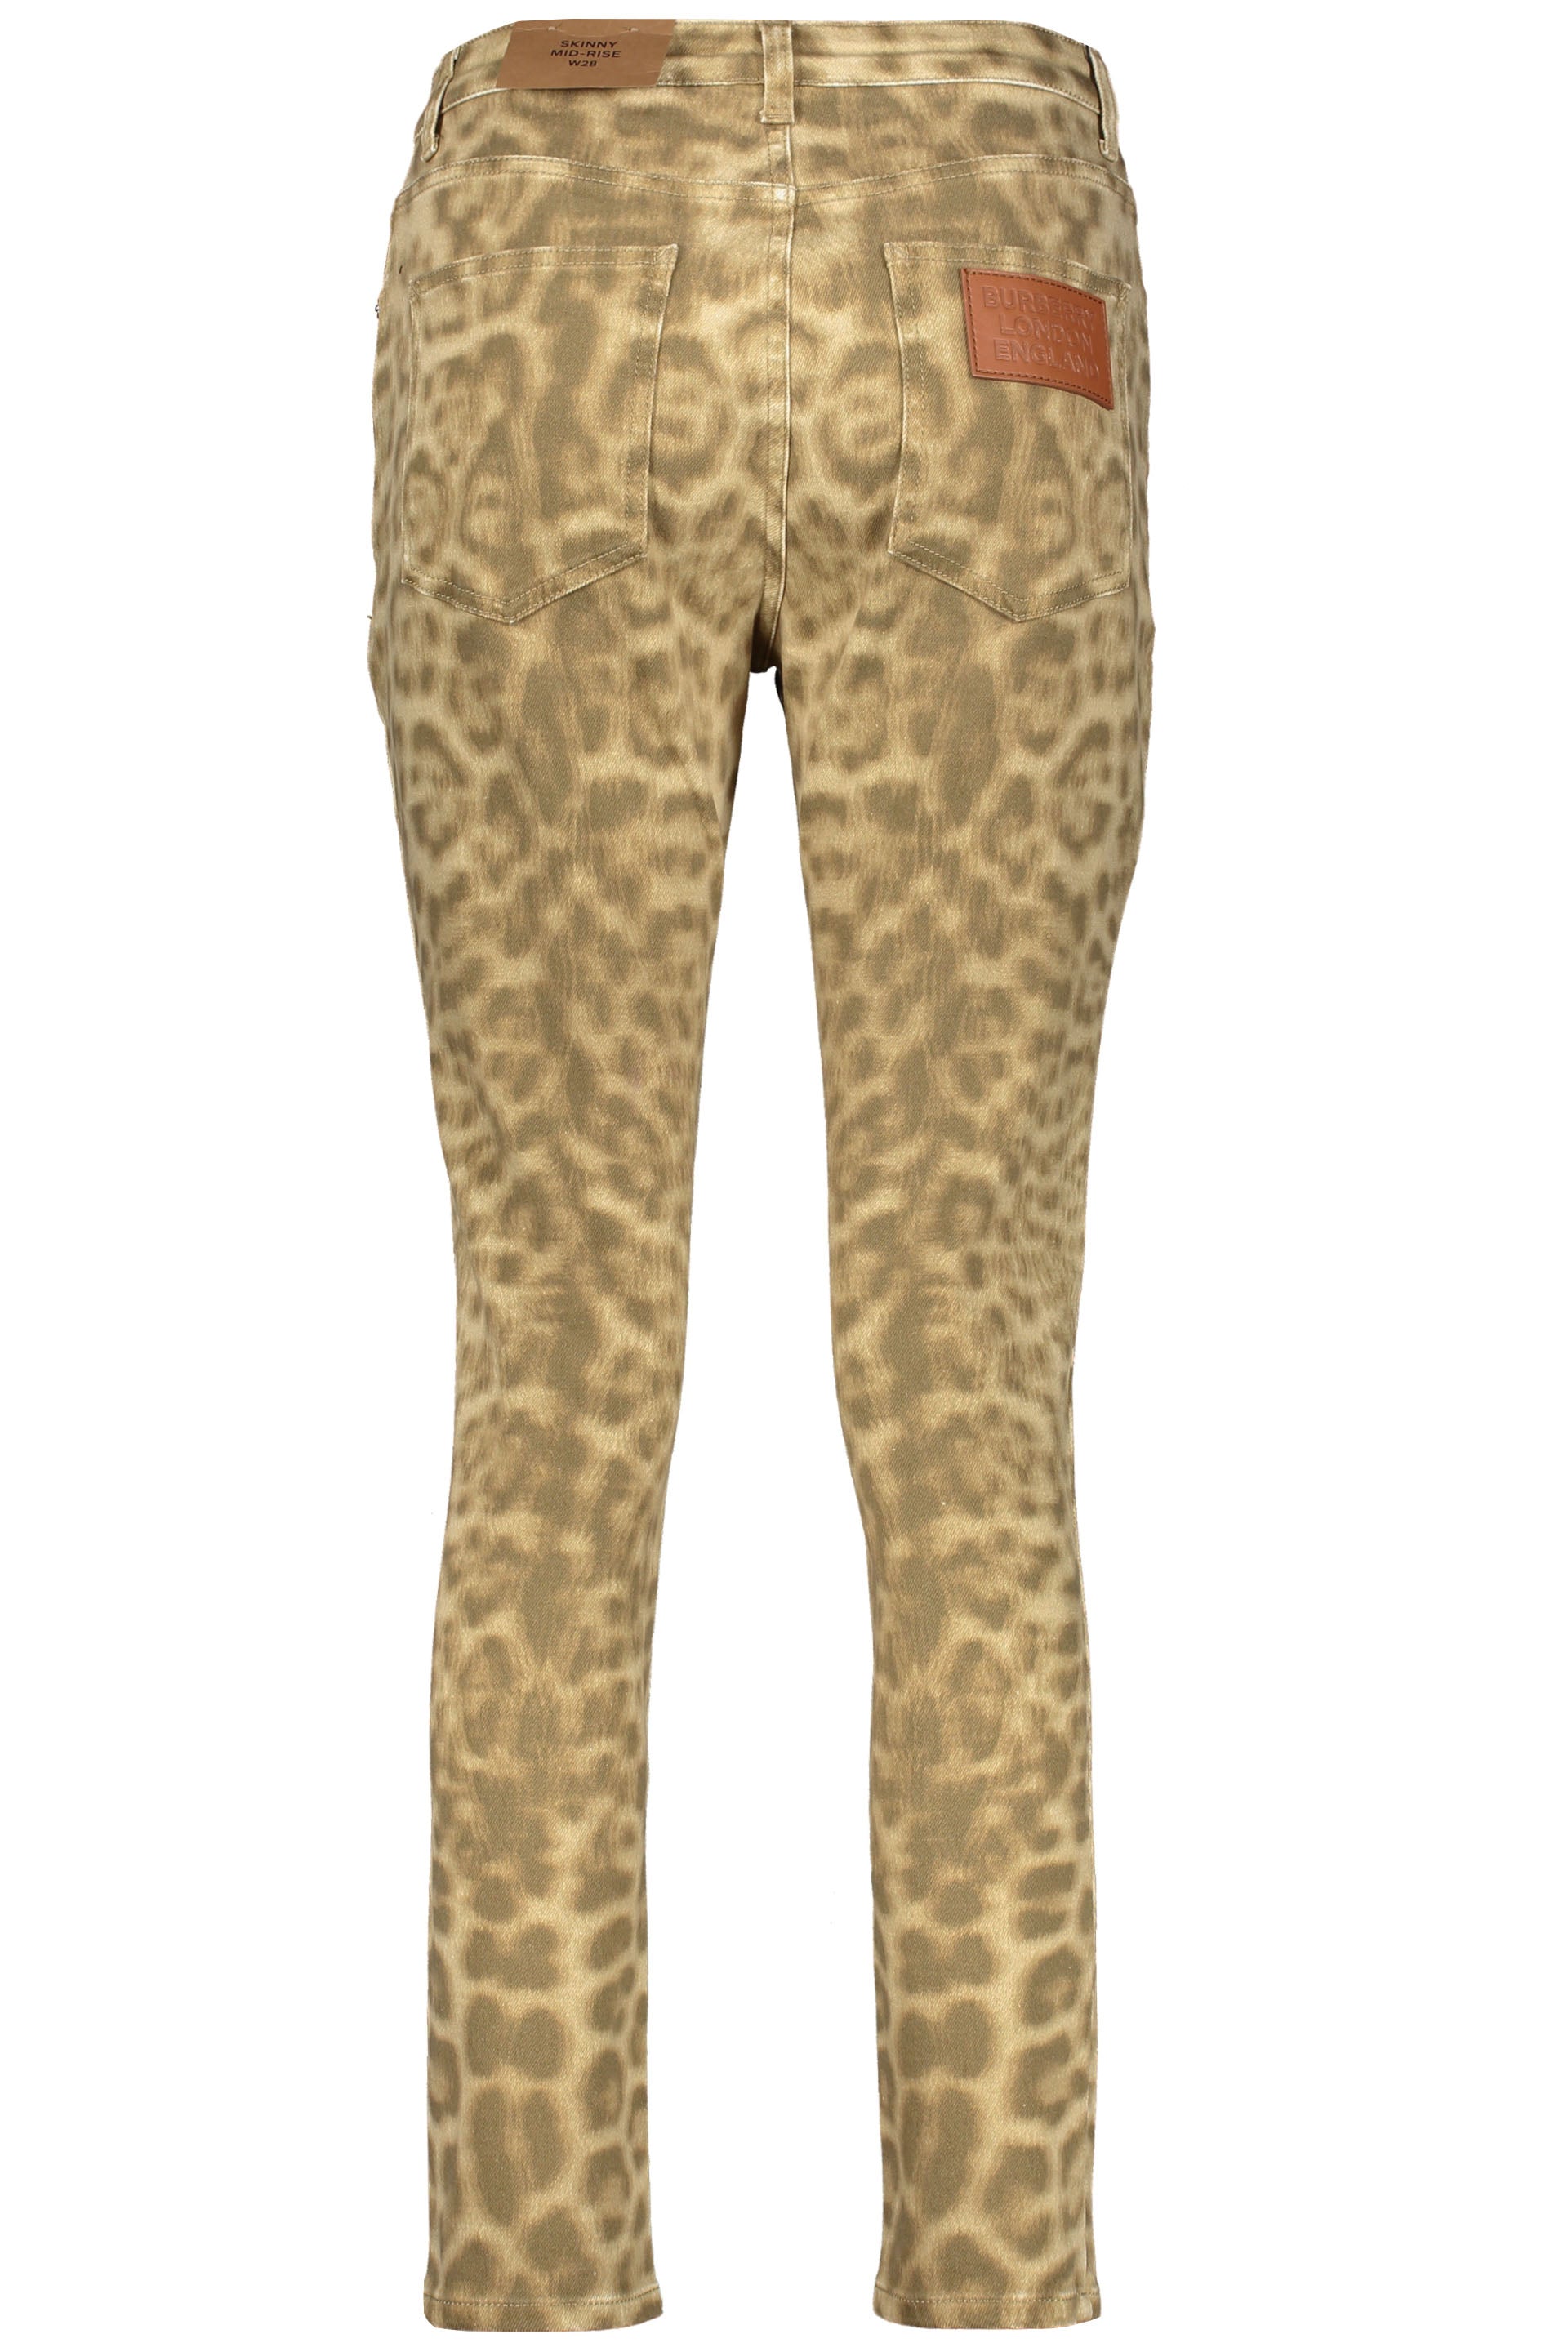 Leopard print skinny jeans